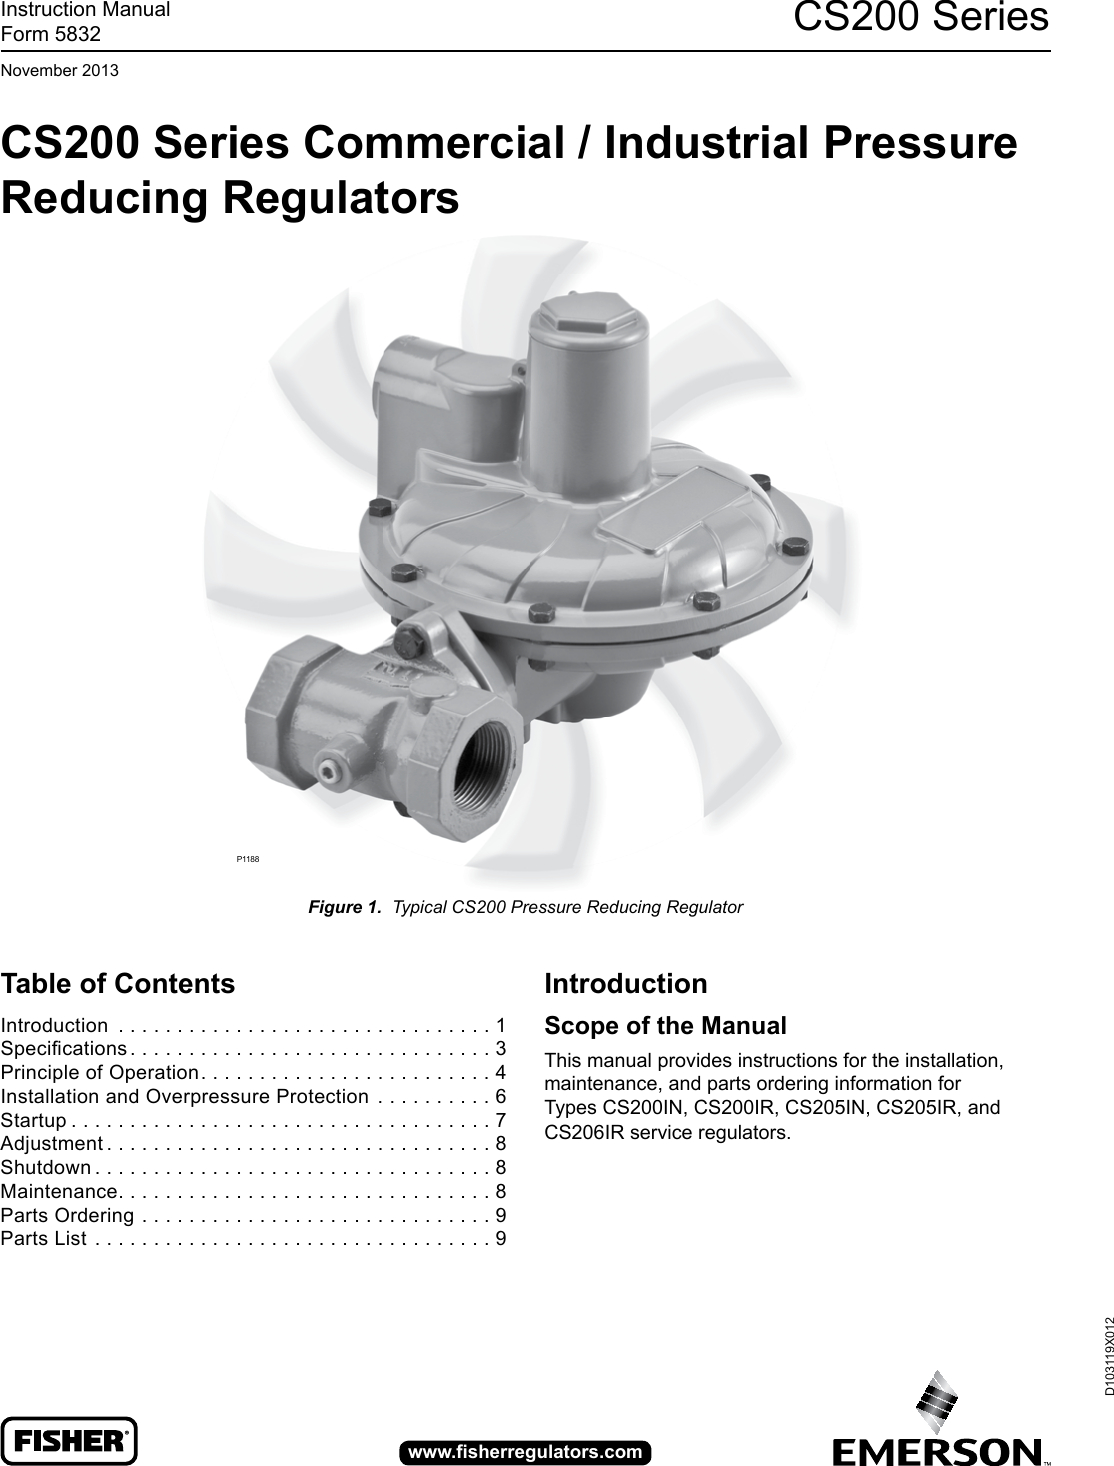 Page 1 of 12 - Emerson Emerson-Cs200-Series-Pressure-Reducing-Regulators-Instruction-Manual-  Emerson-cs200-series-pressure-reducing-regulators-instruction-manual